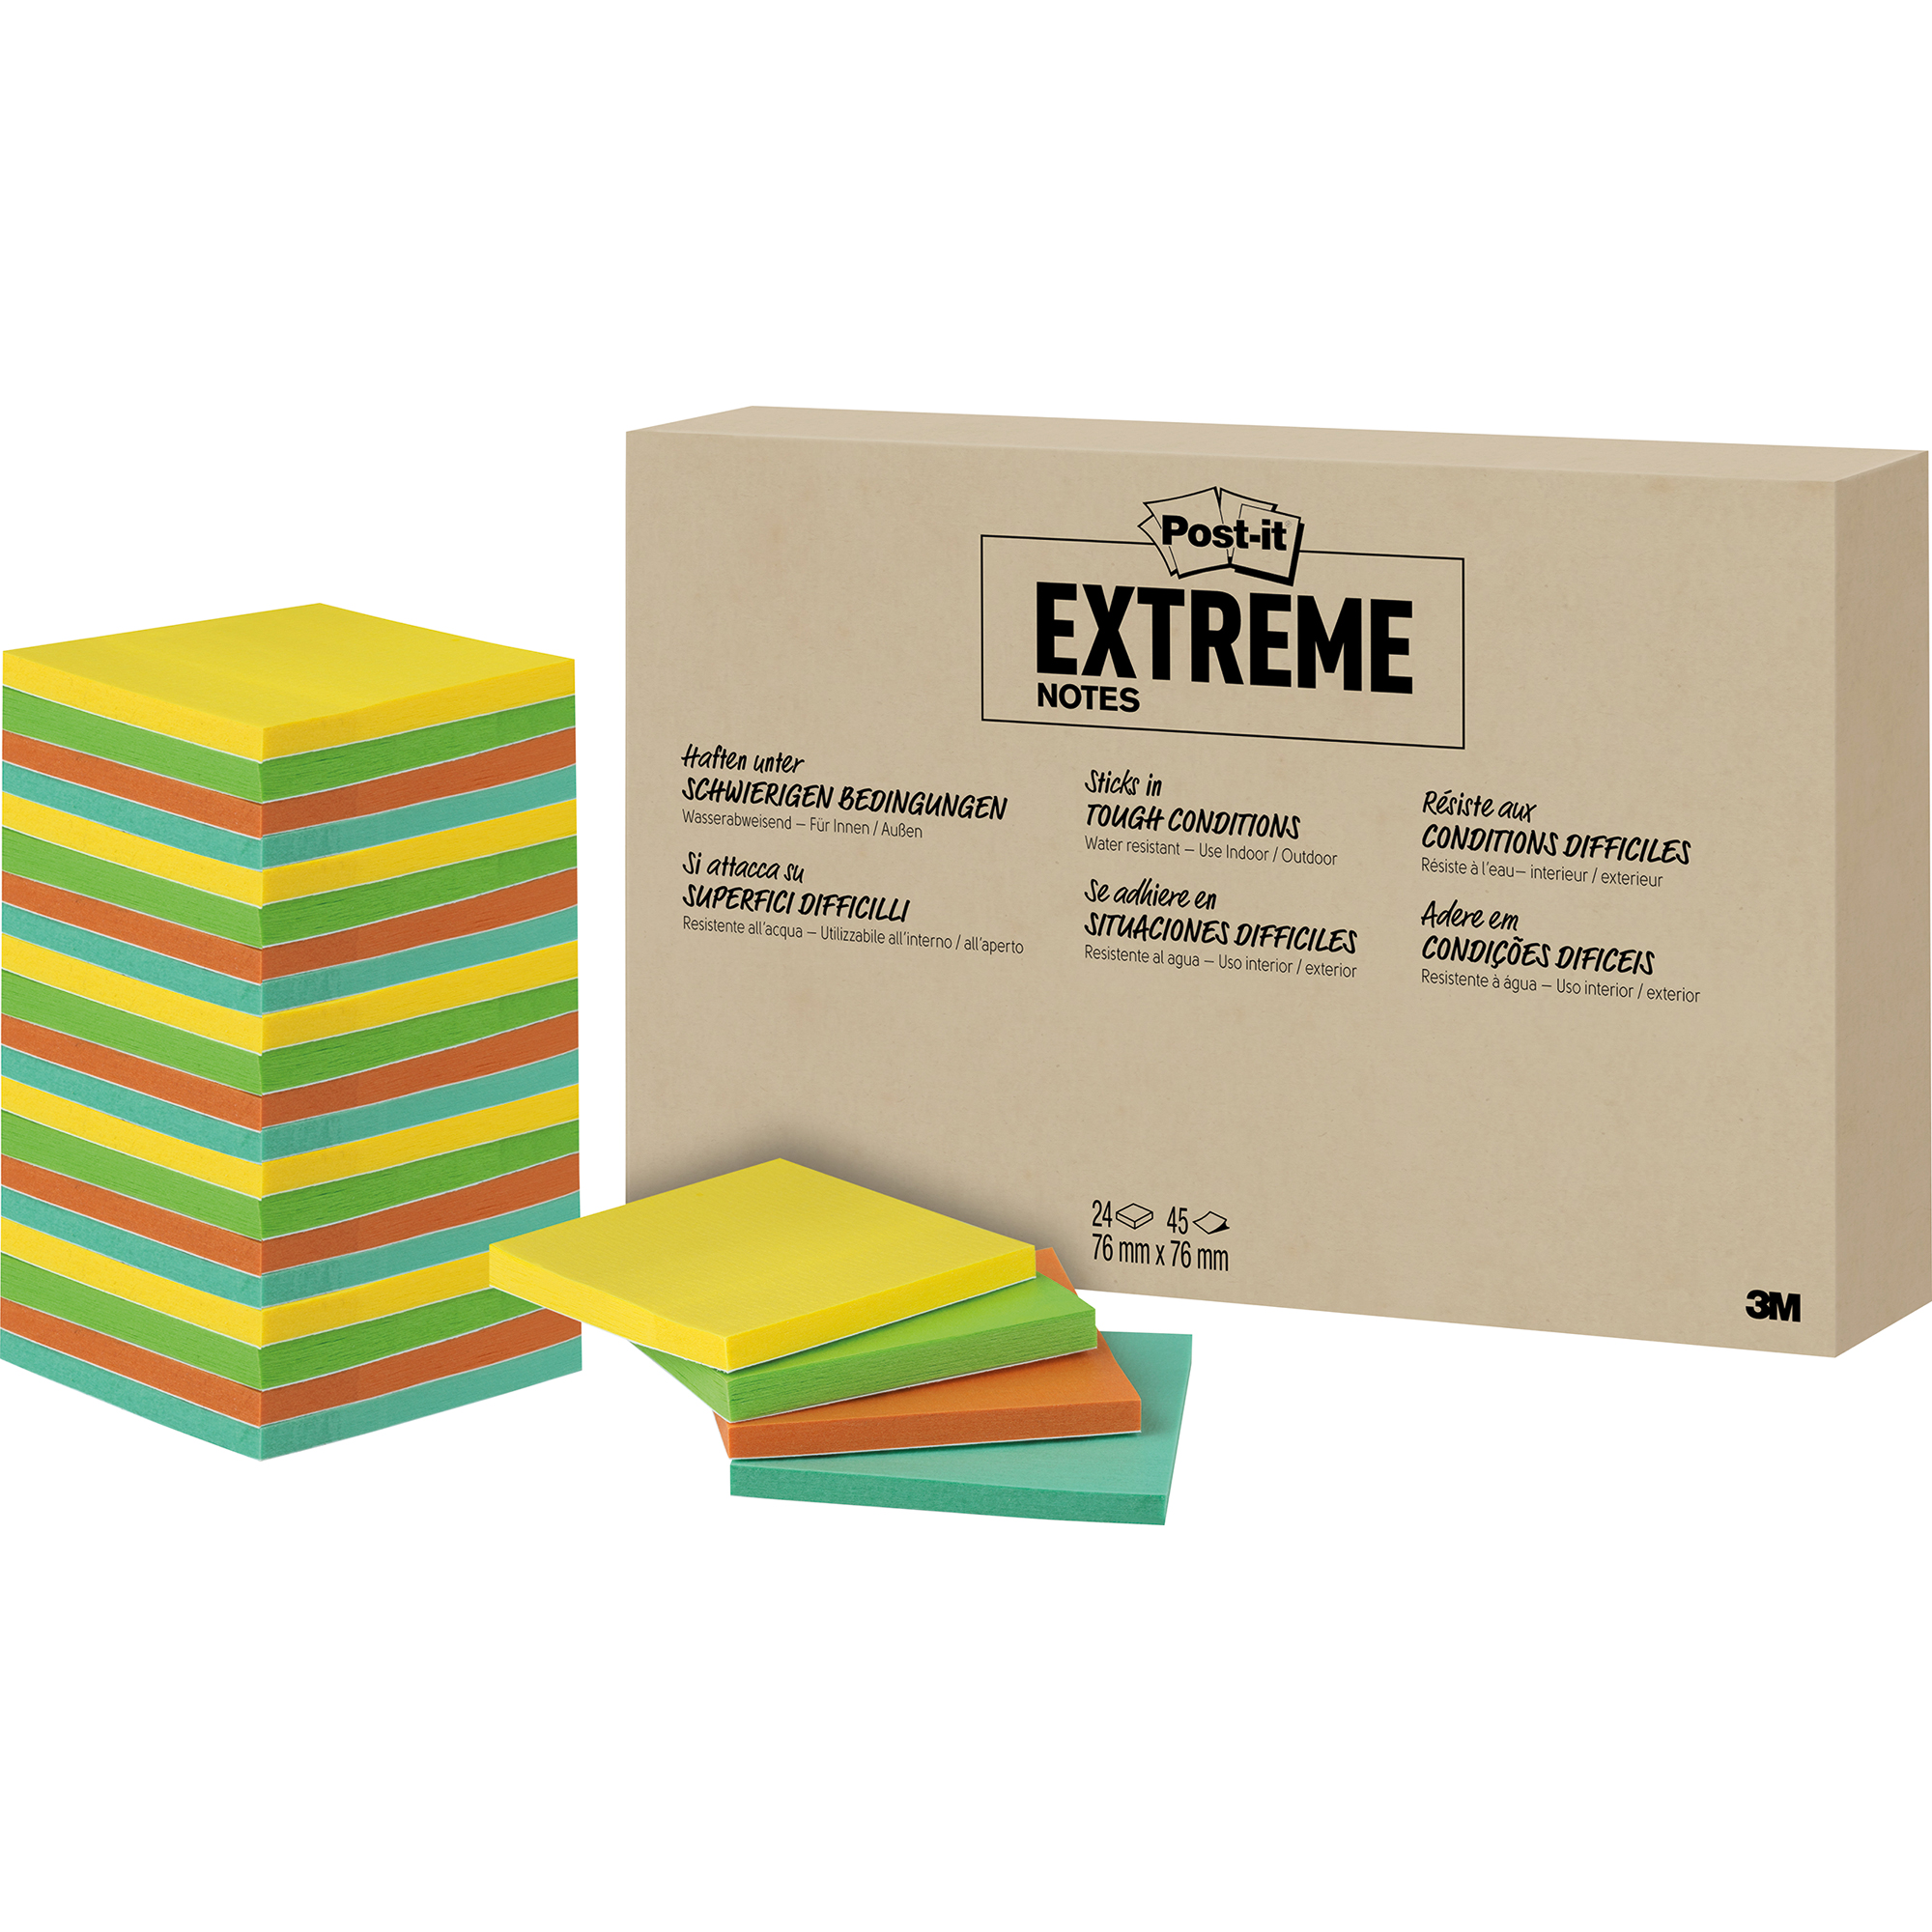 Post-it Haftnotiz Extreme Notes 24 Block/Pack.